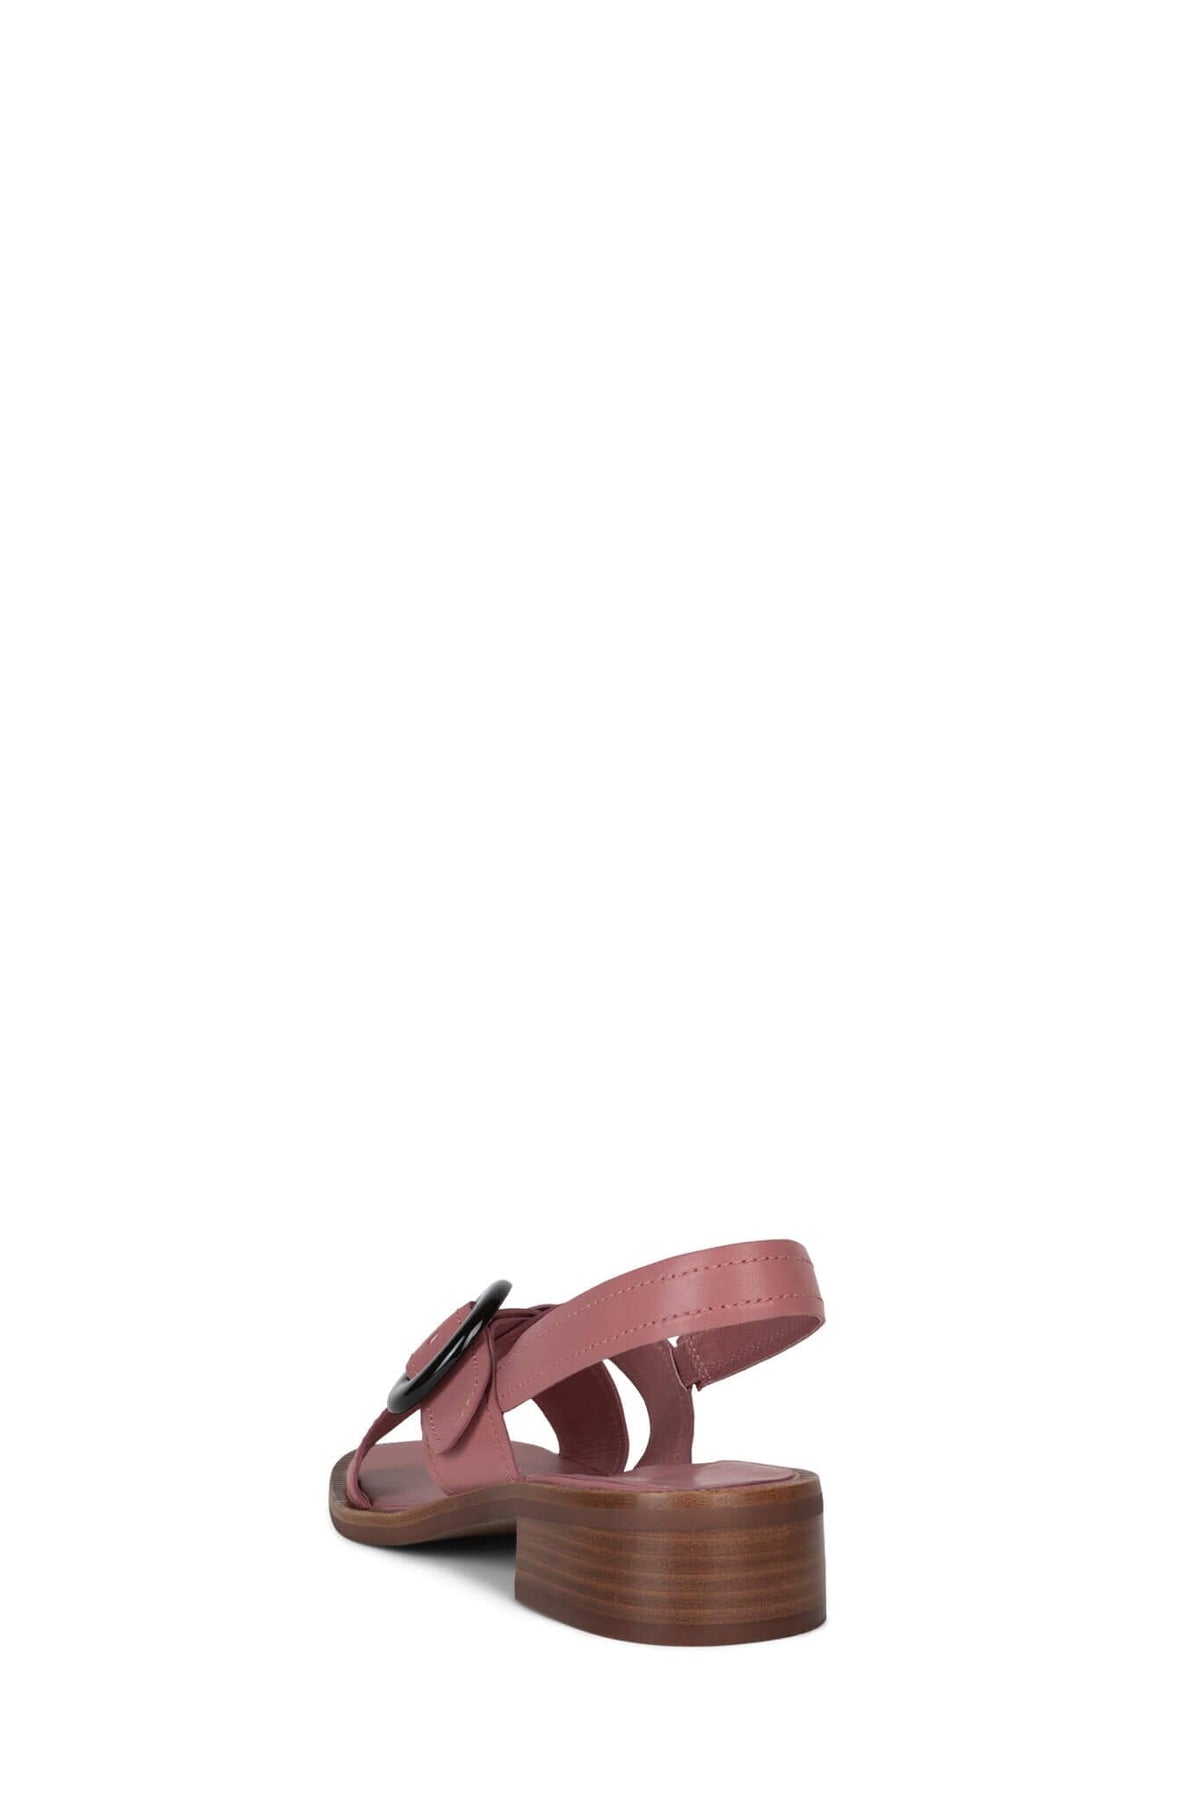 GLIMPSE-SB Jeffrey Campbell Heeled Sandal Dusty Pink Natural Stack